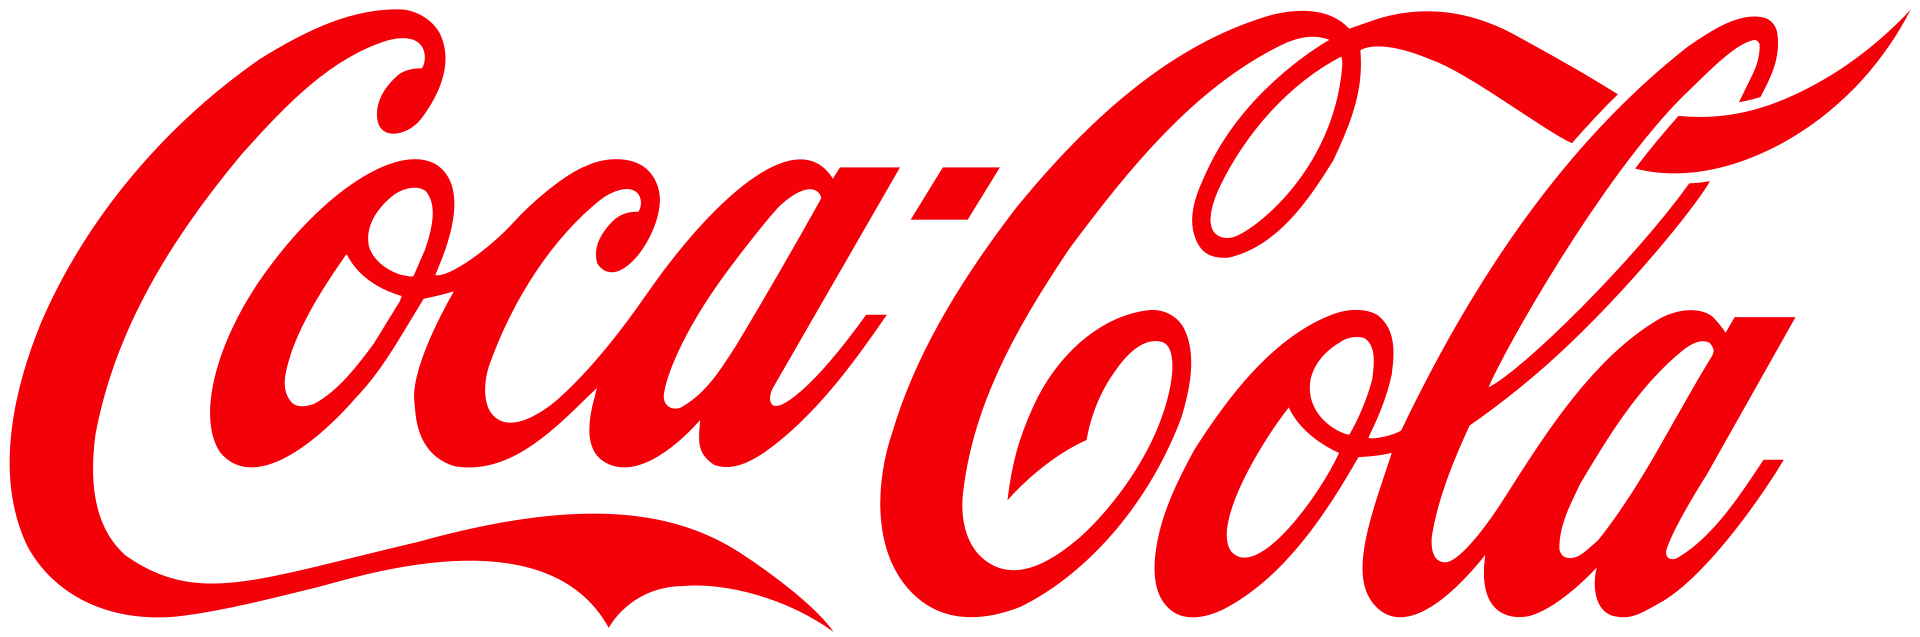 1920px-coca-cola_logo_svg.png